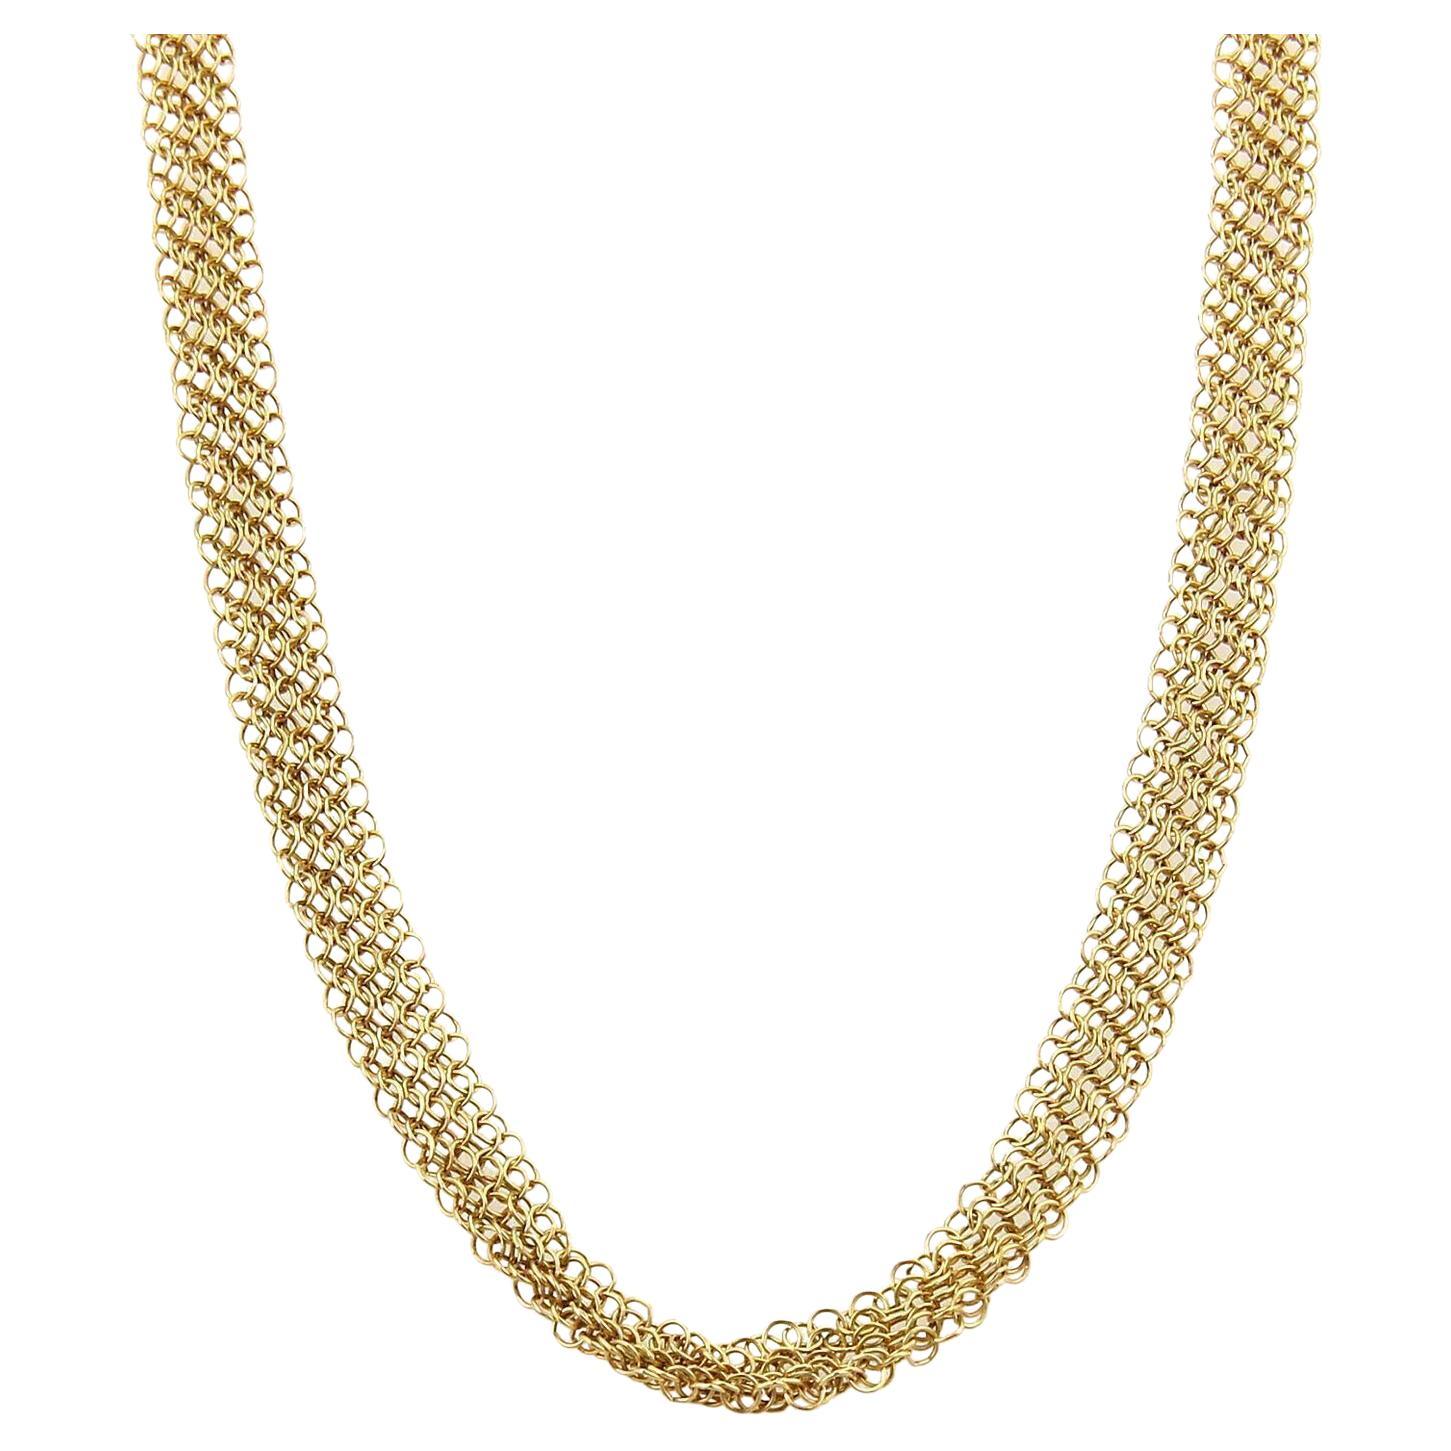 Tiffany & Co. Peretti 18k Gelbgold 6mm breite Mesh Kette Halskette 30" lang